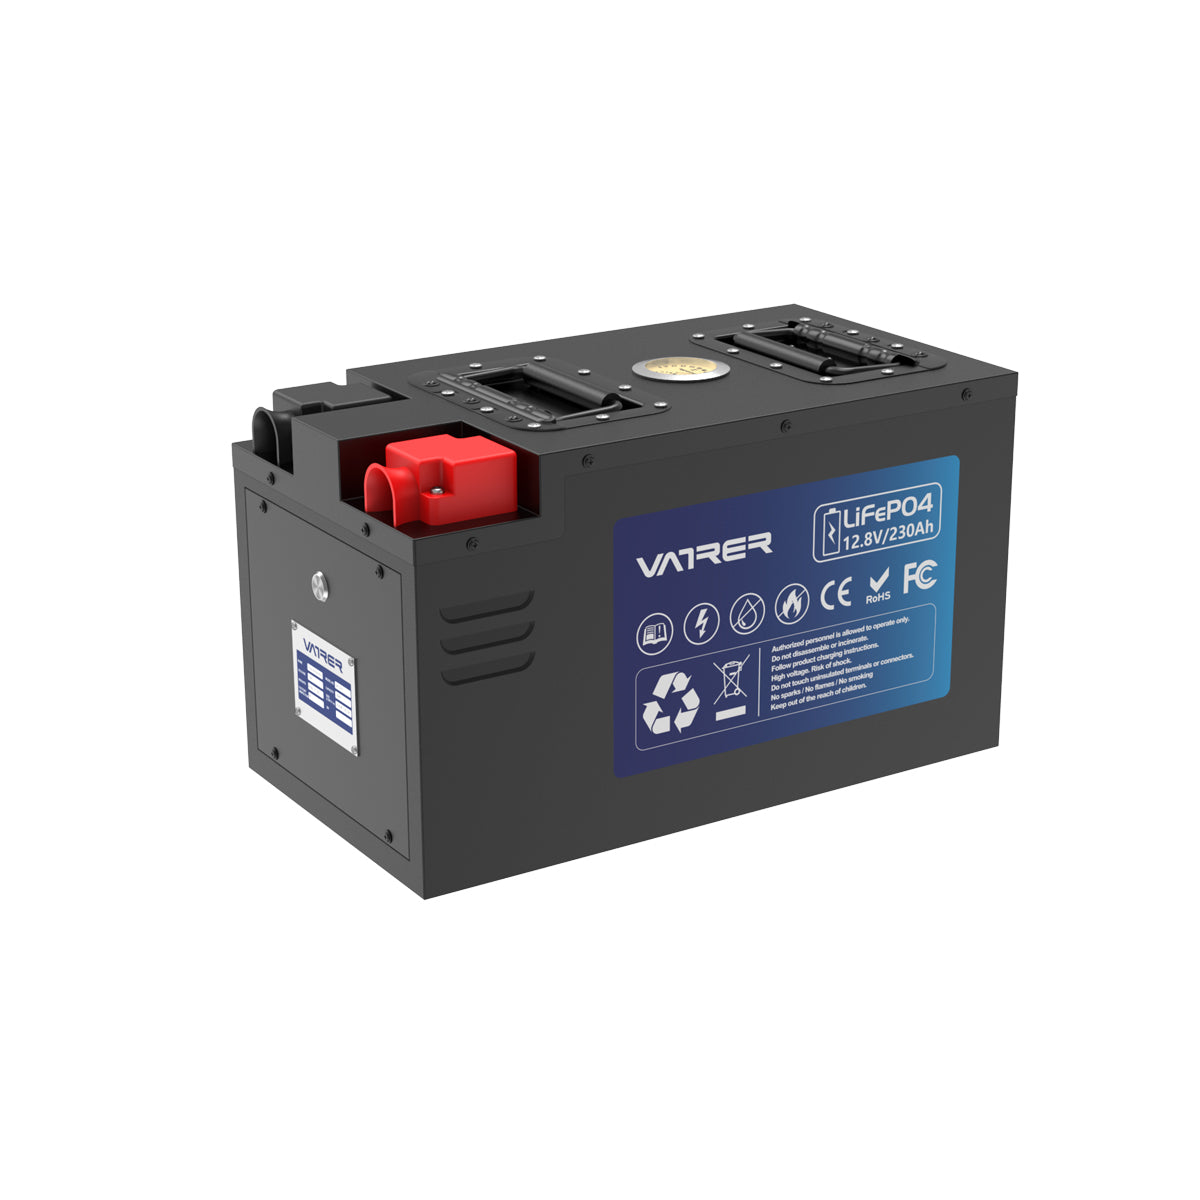 Vatrer 12V 230Ah Low Temp Cutoff LiFePO4 RV Battery, Built in 200A BMS, Max  2944Wh Energy, Bluetooth-Vatrer